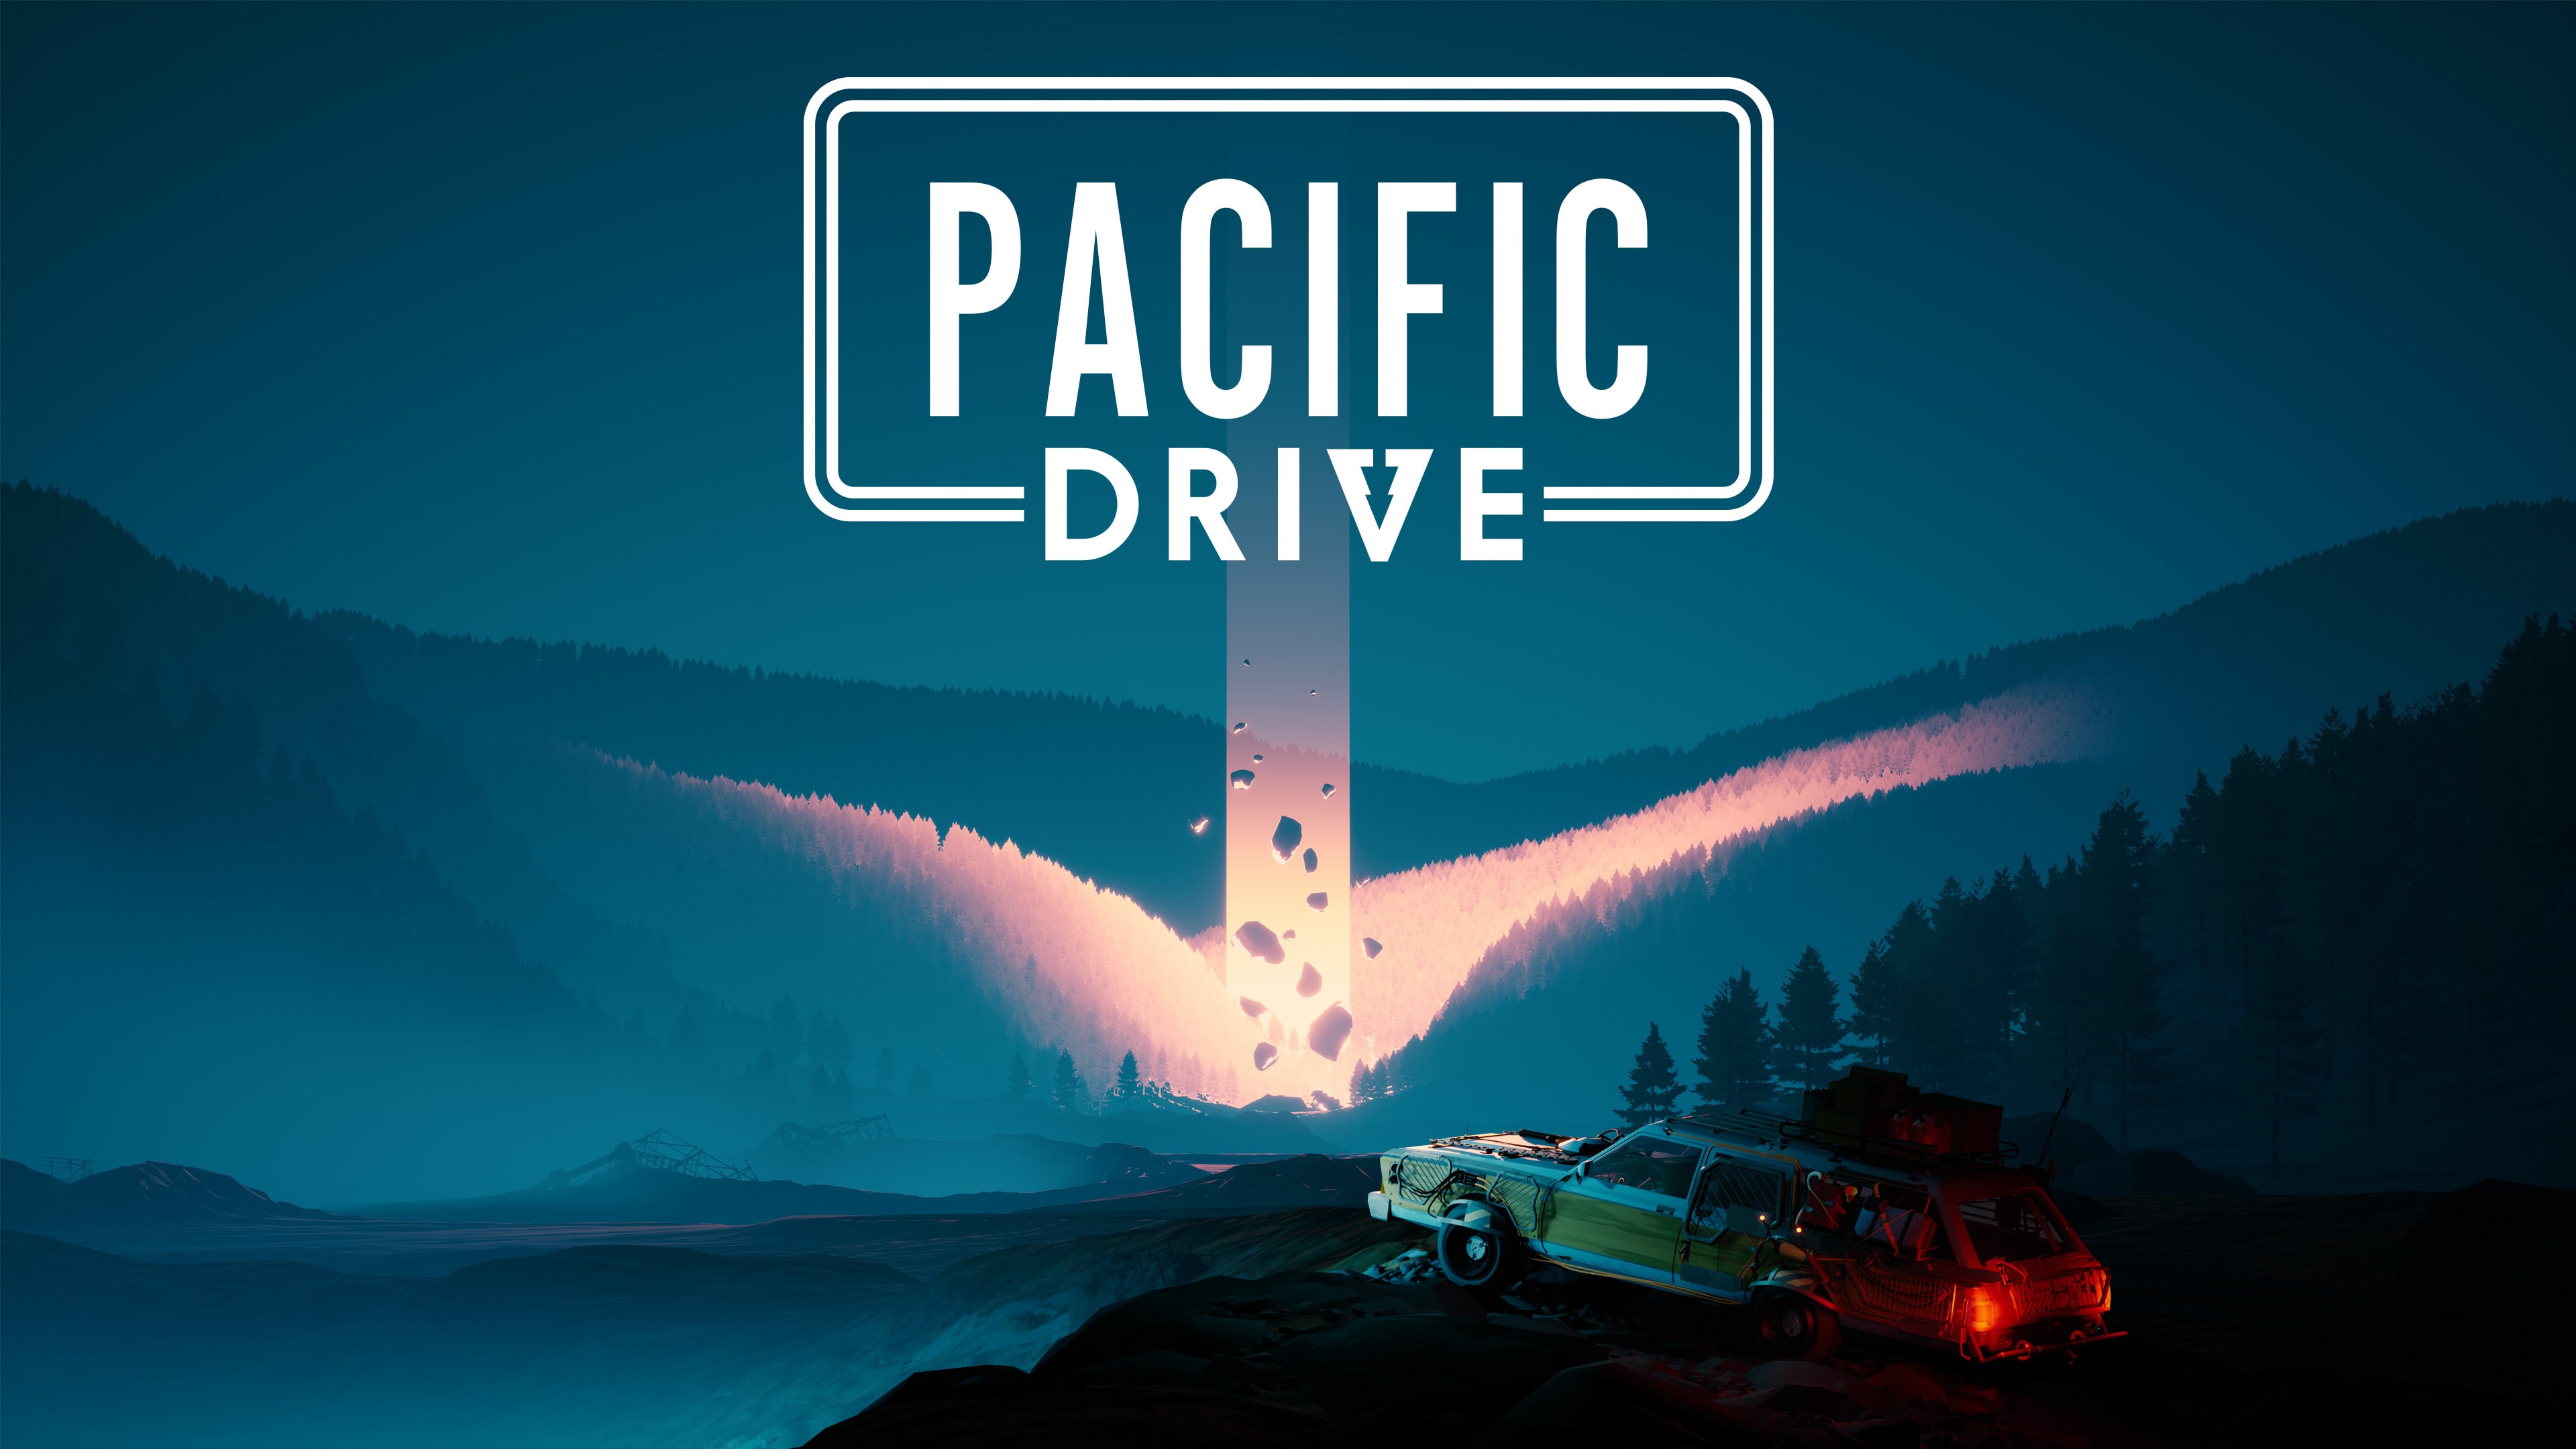 Pacific Drive (簡體中文, 韓文, 英文, 繁體中文, 日文)